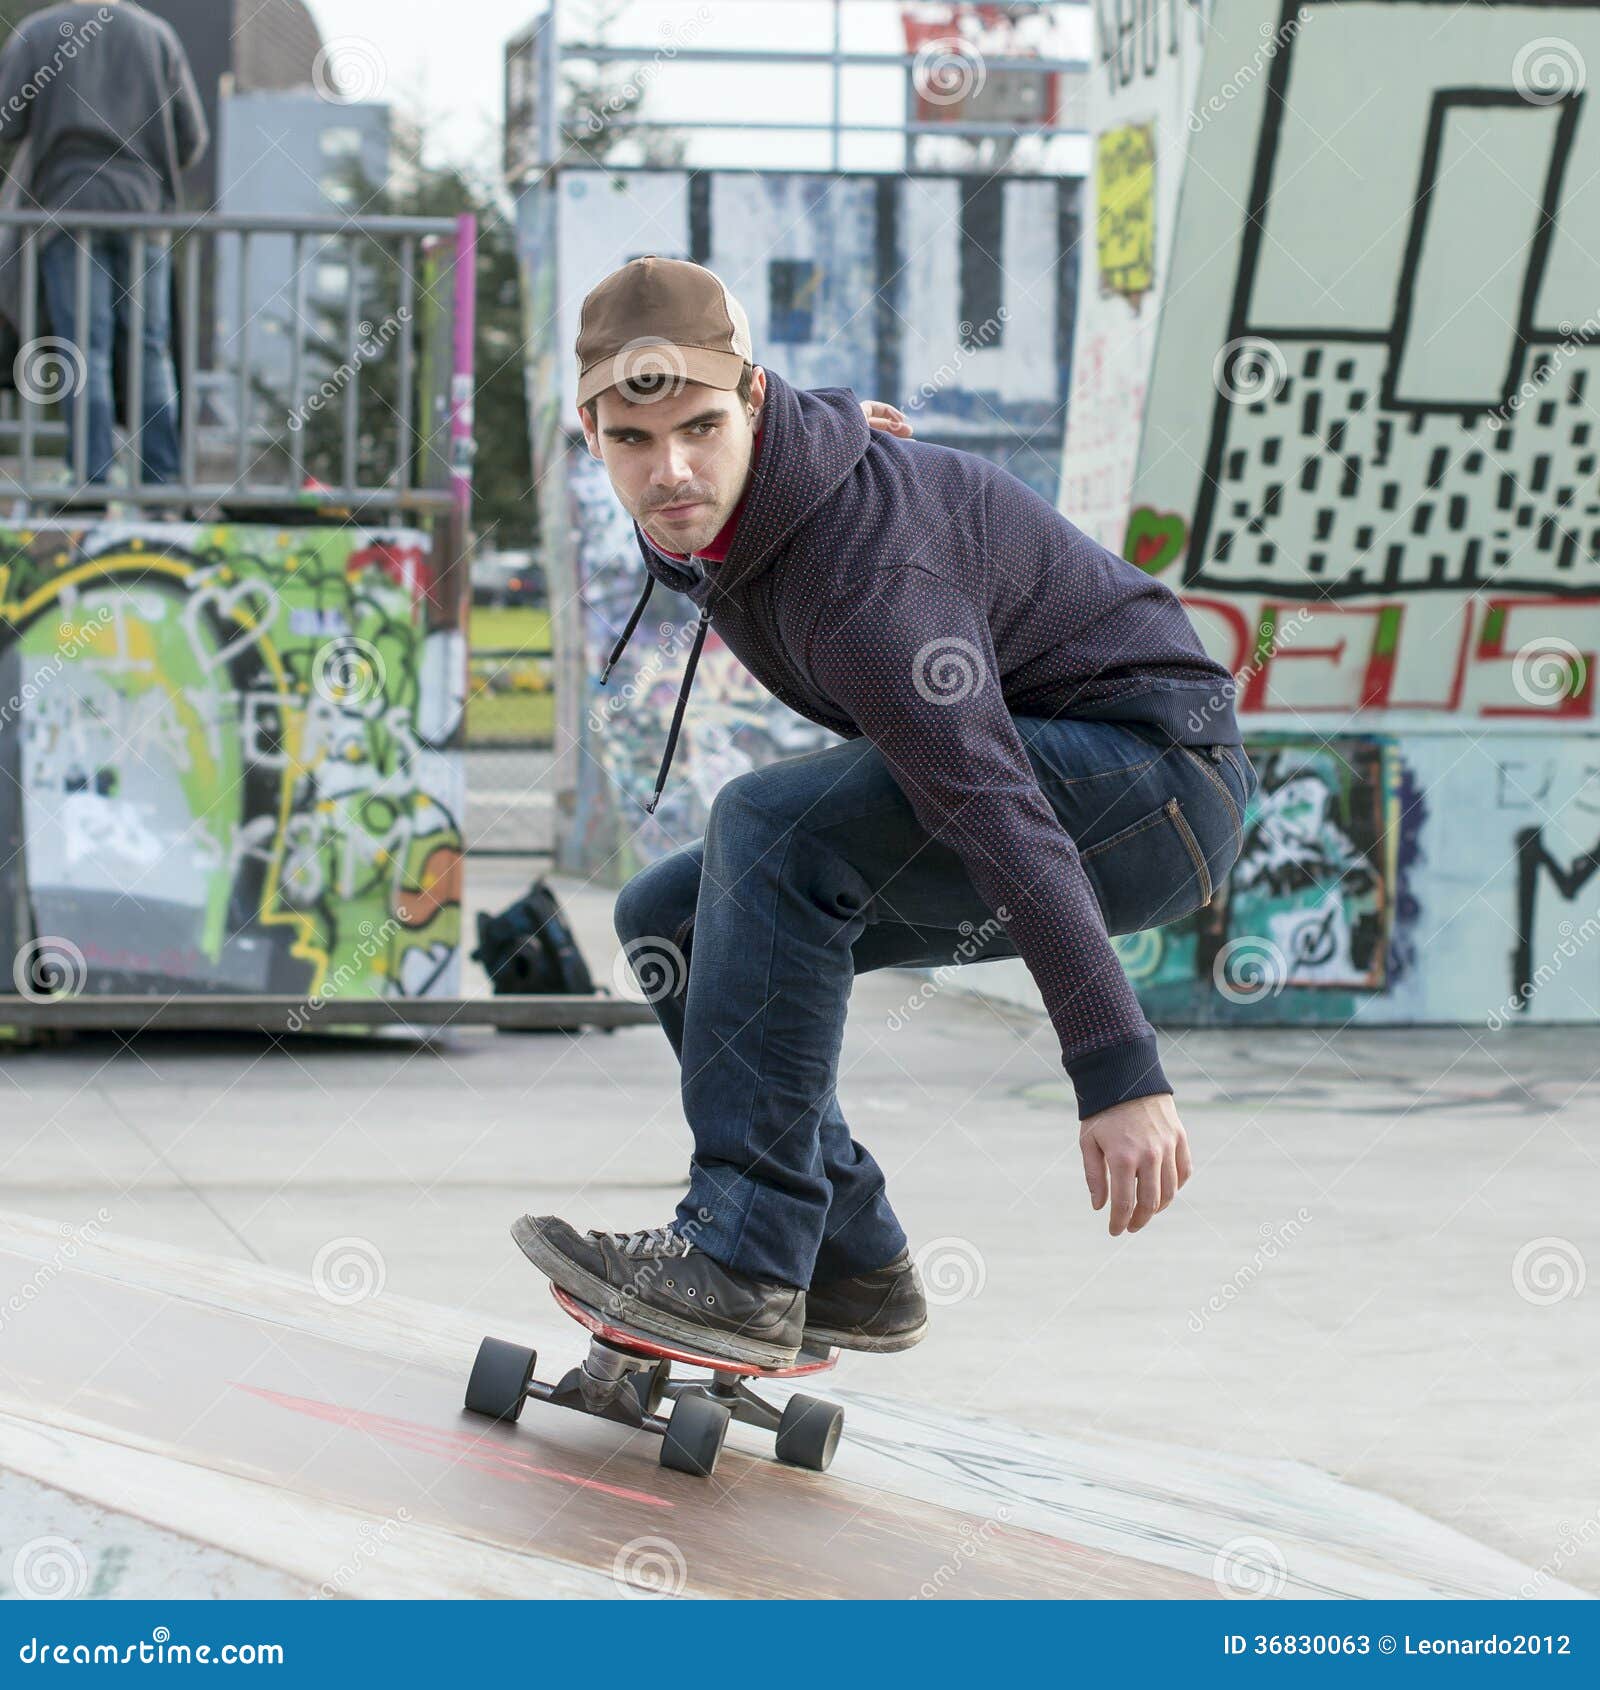 Skateboarder in the Skate Park. Stock Image - Image of caucasian ...